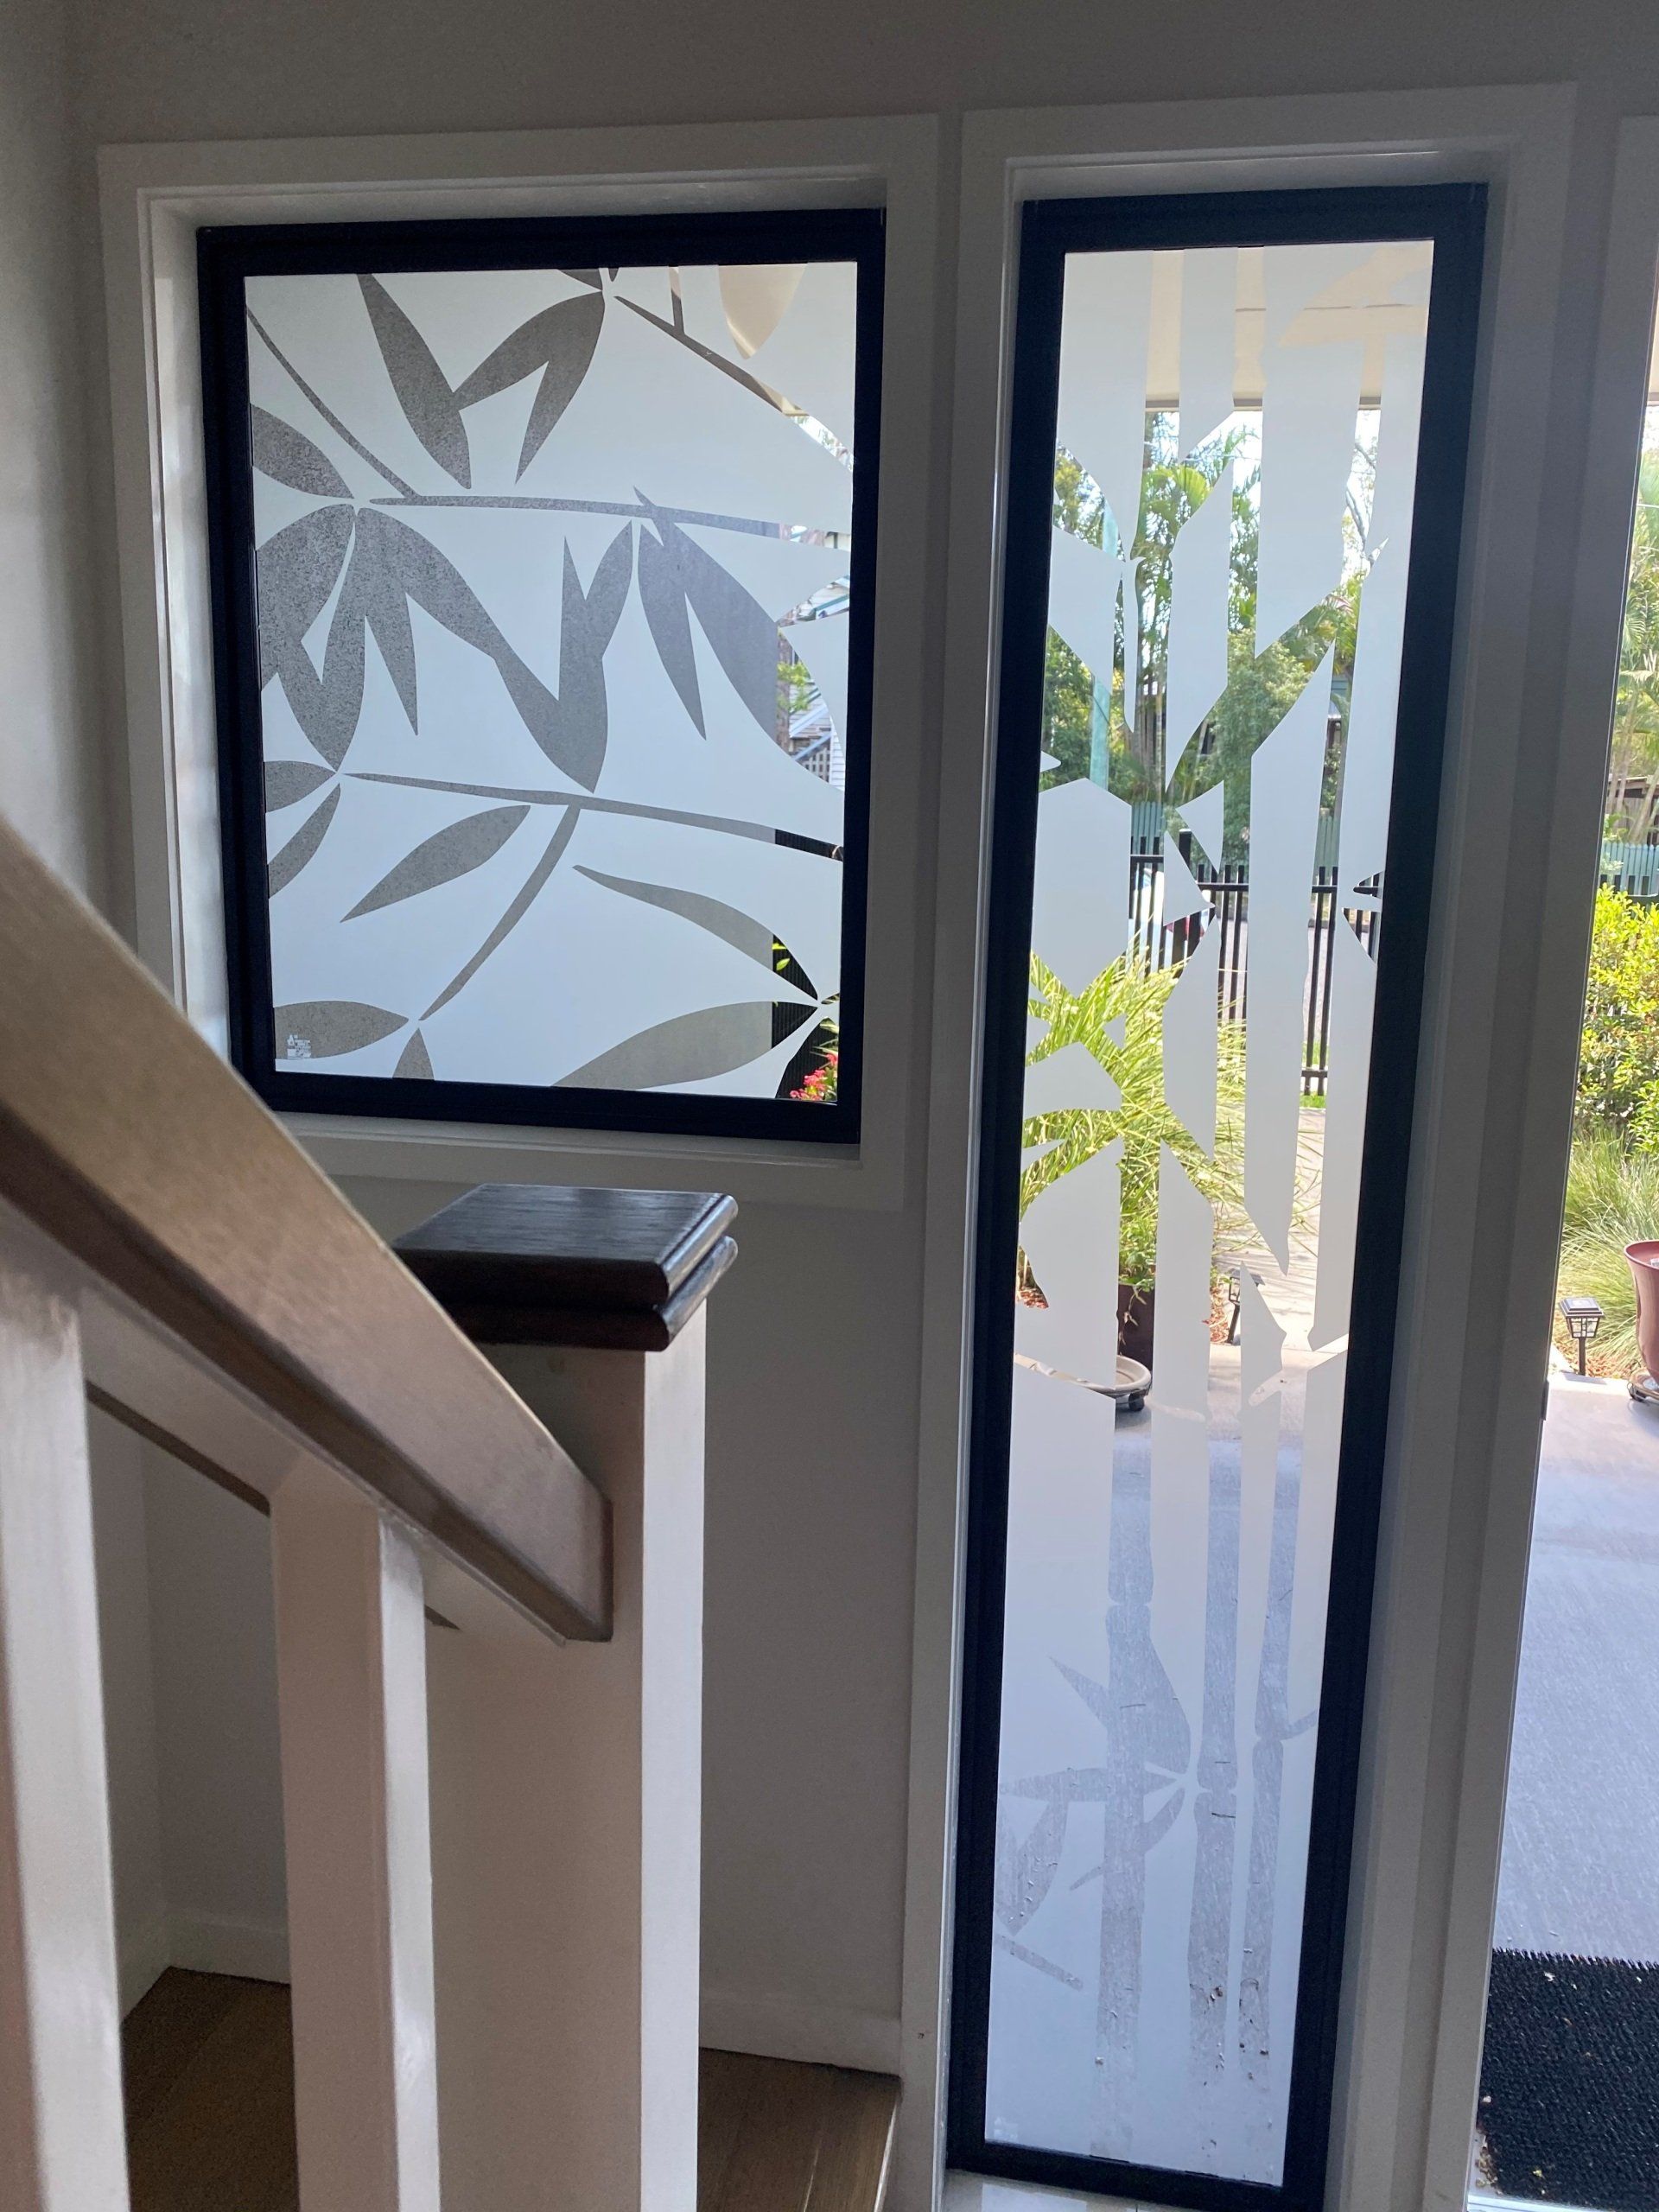 Large modern designed home - home window tinting Brisbane